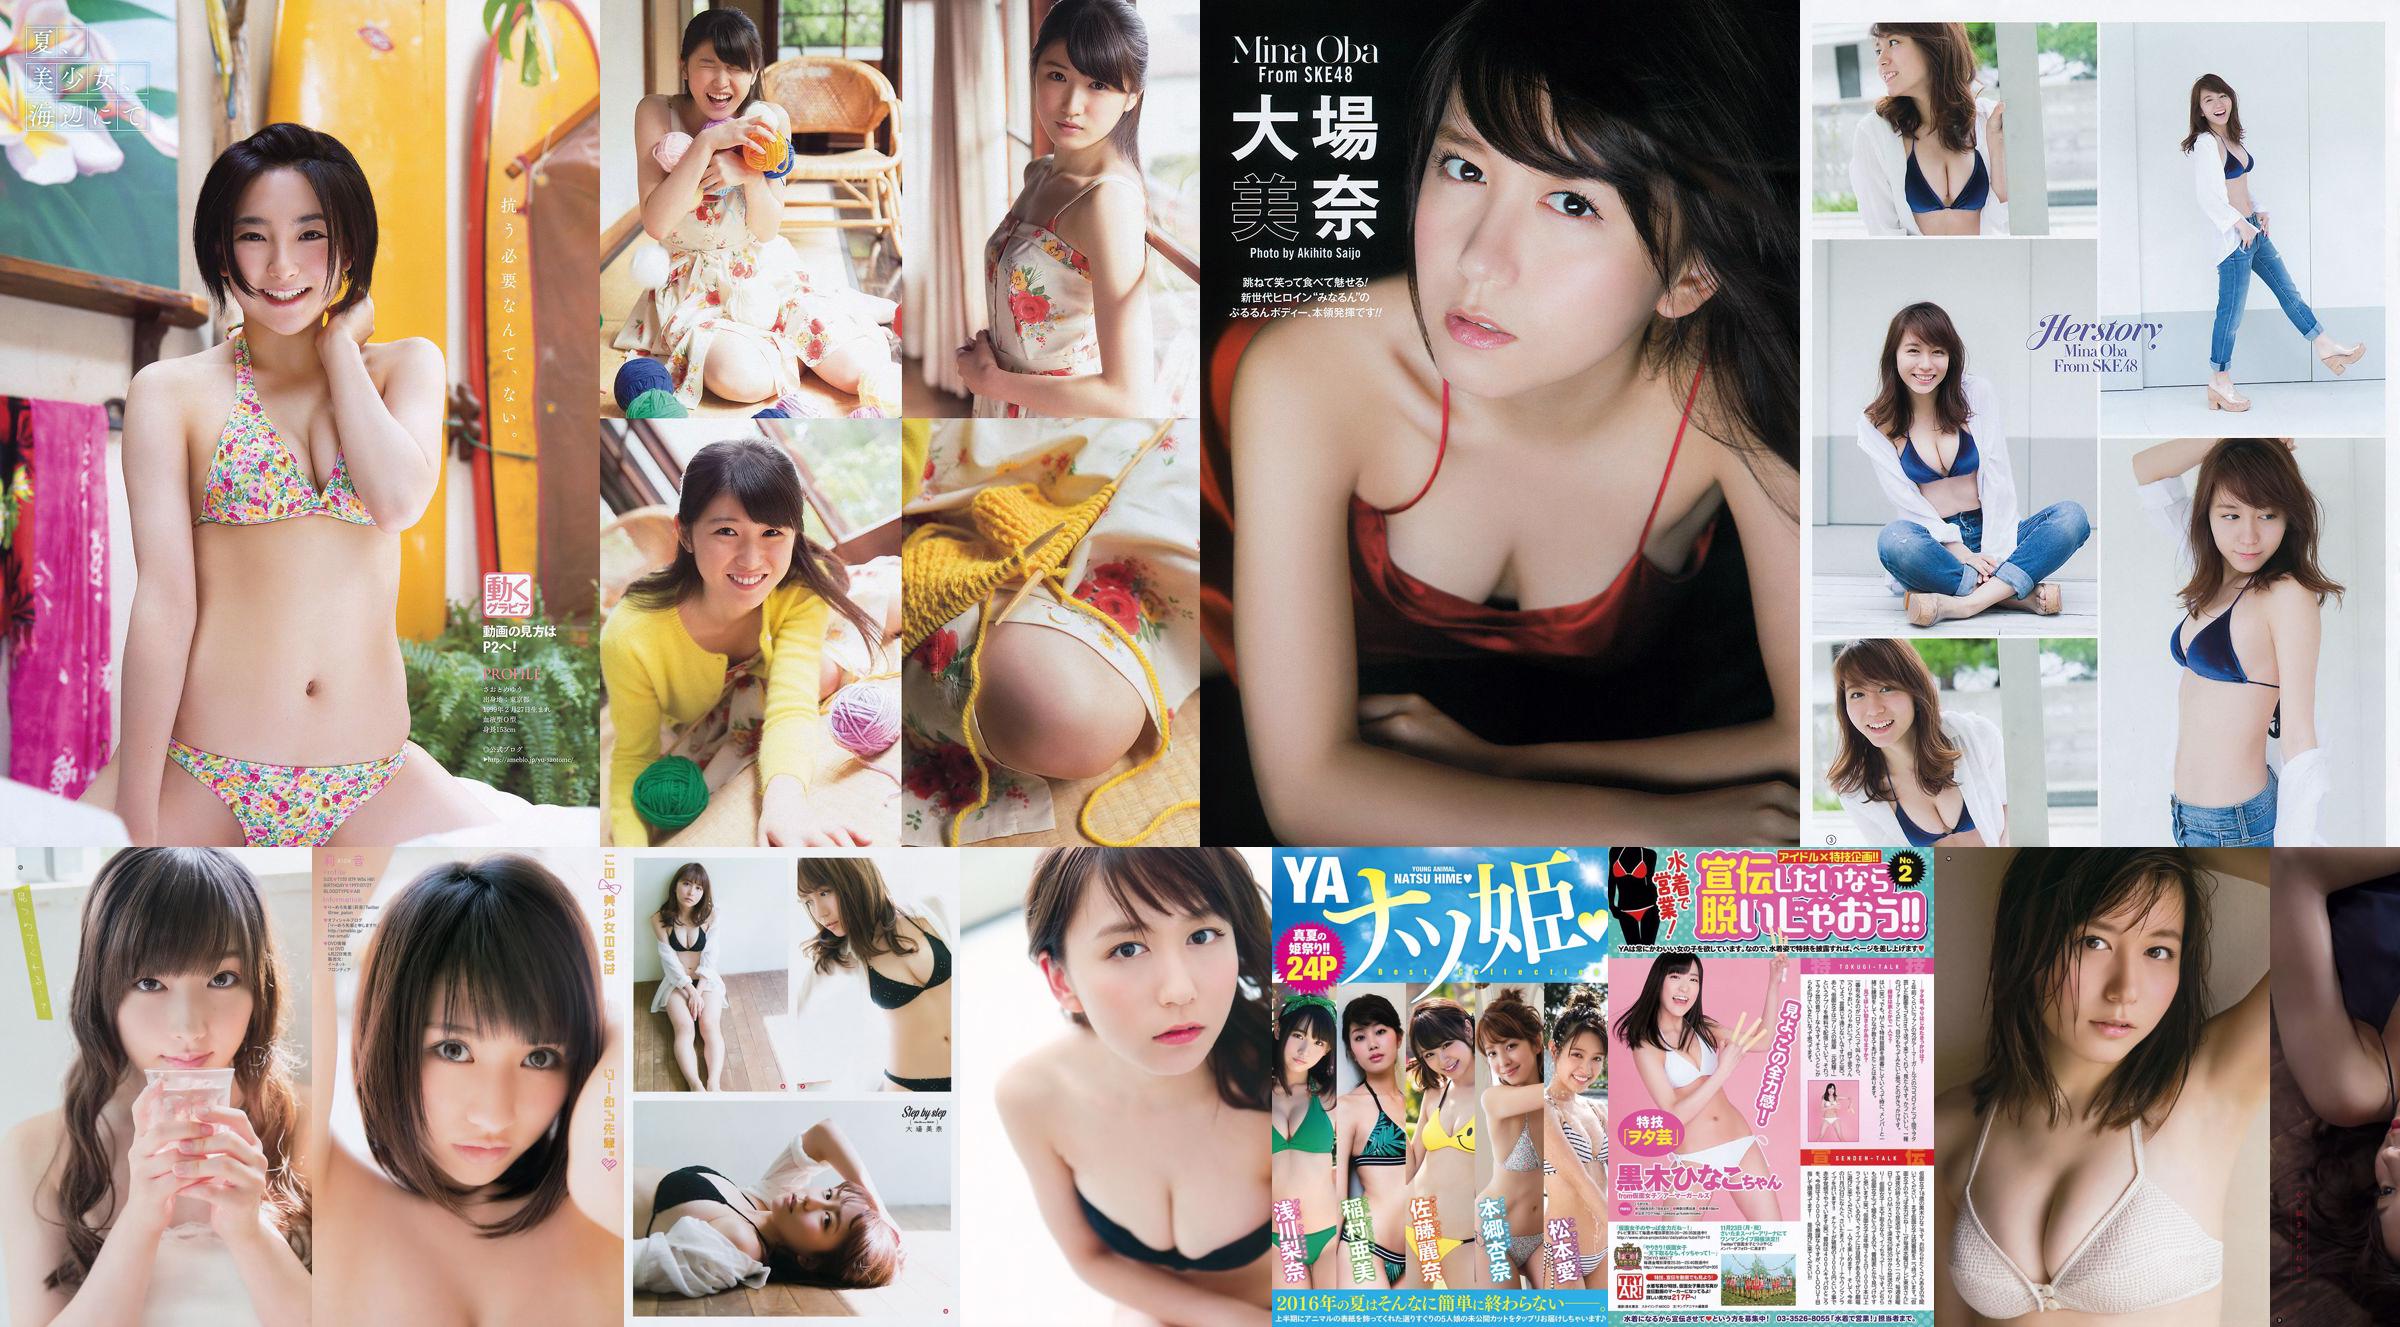 [Young Gangan] Mina Ohba Kyoka 2015 Magazine photo n ° 18 No.e811bc Page 3